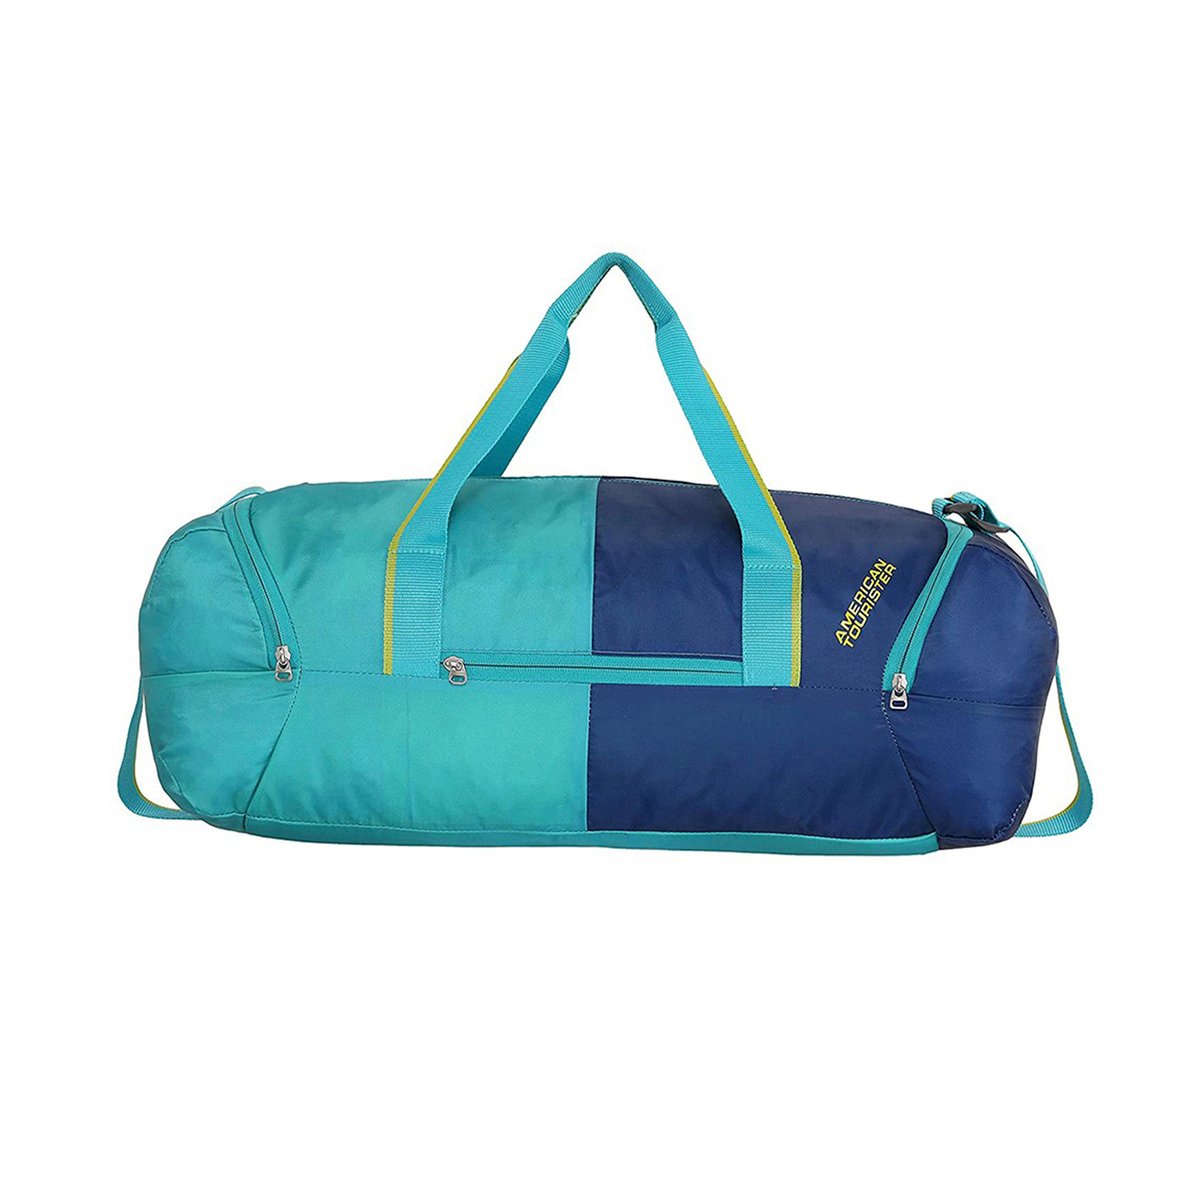 American Tourister Flair Duffle Bag, 53 cm, Blue